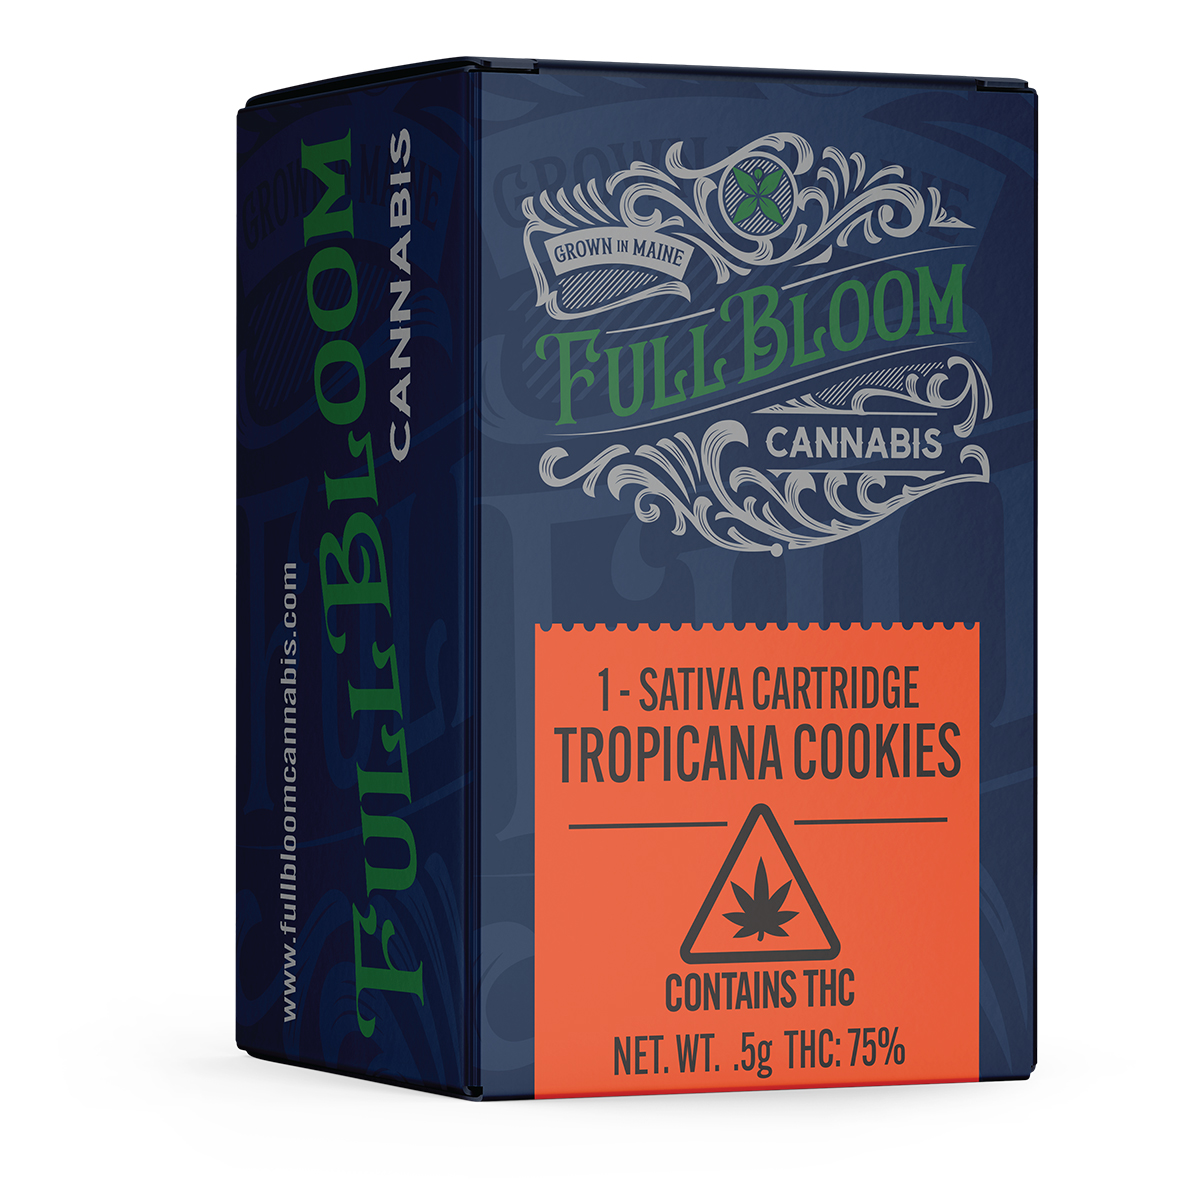 full bloom cannabis tropicana cookies sativa vaporizer